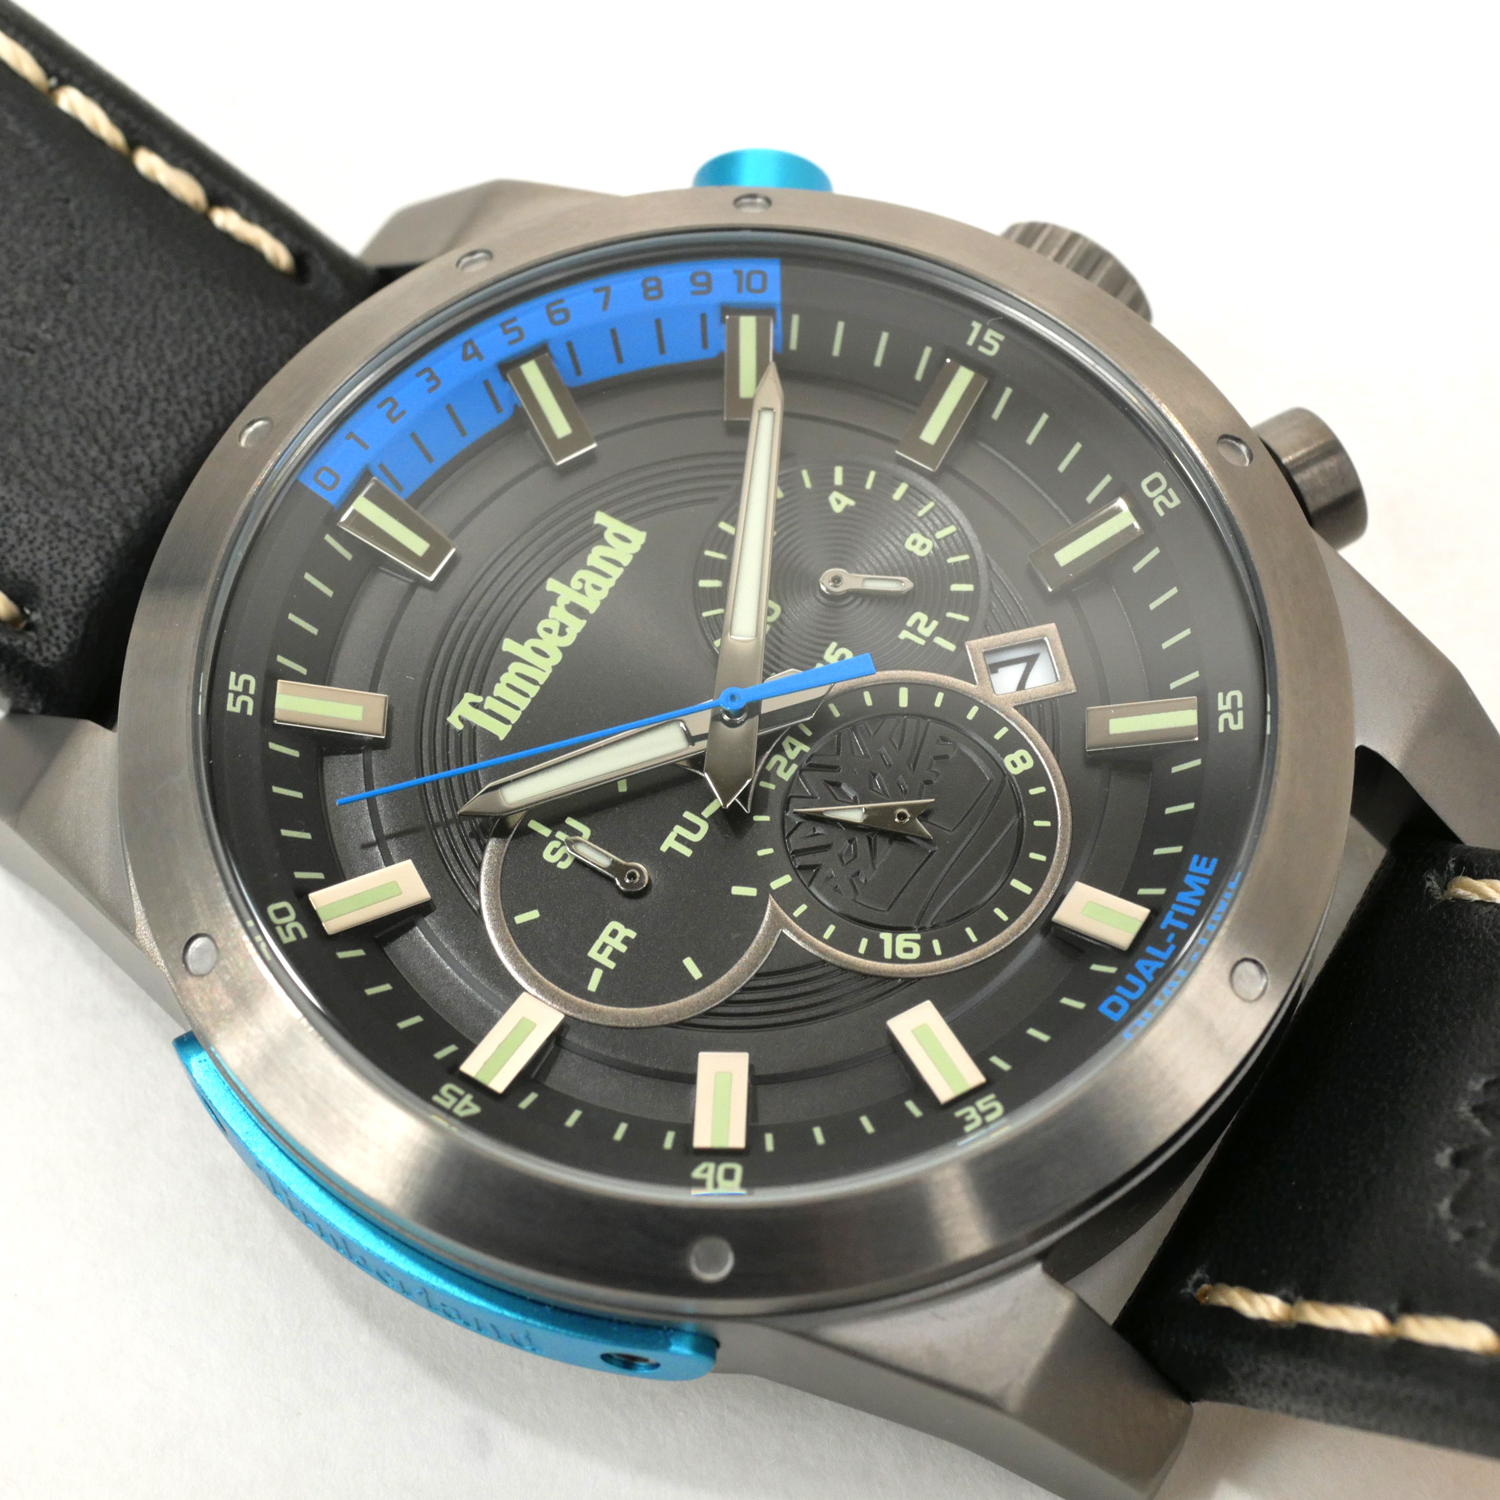 Timberland Sherbrook Men's Watch Black Dial / Black Leather [TDWJA1911980]  - $99.00 : Chronotiempo.com, your unique online watch boutique